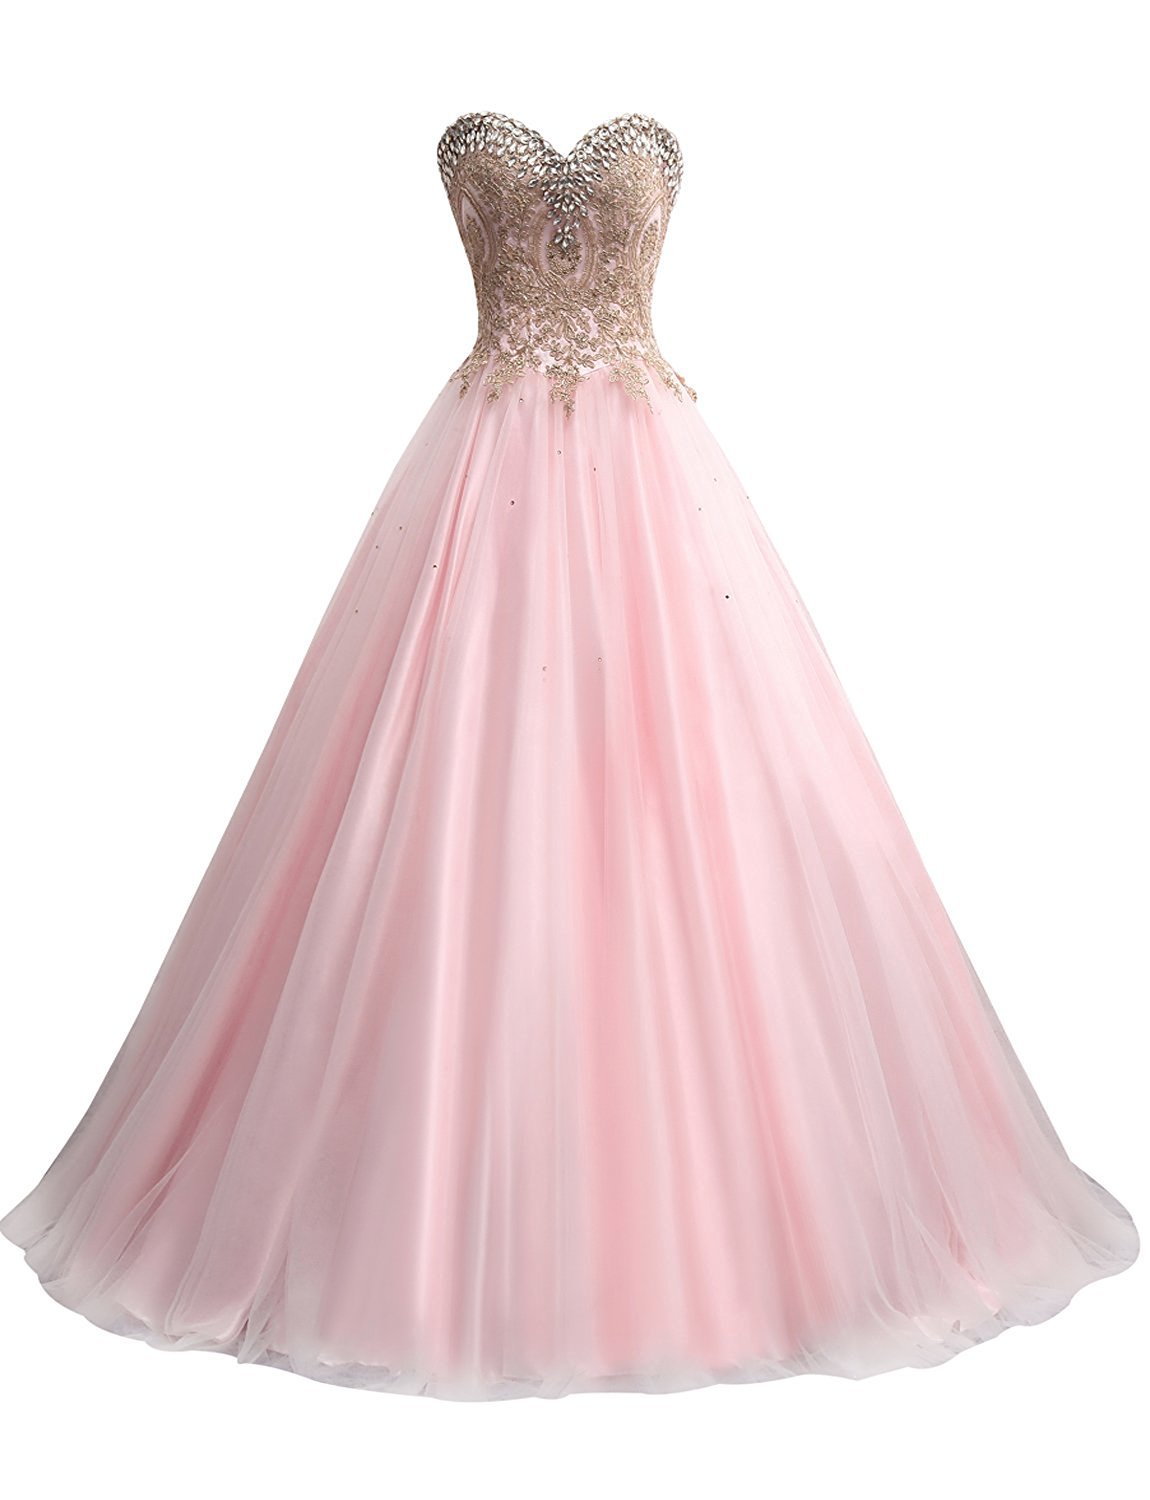 Strapless A-line Long Tulle Pink Prom Dress Golden Appliques Women Evening Dress 2019